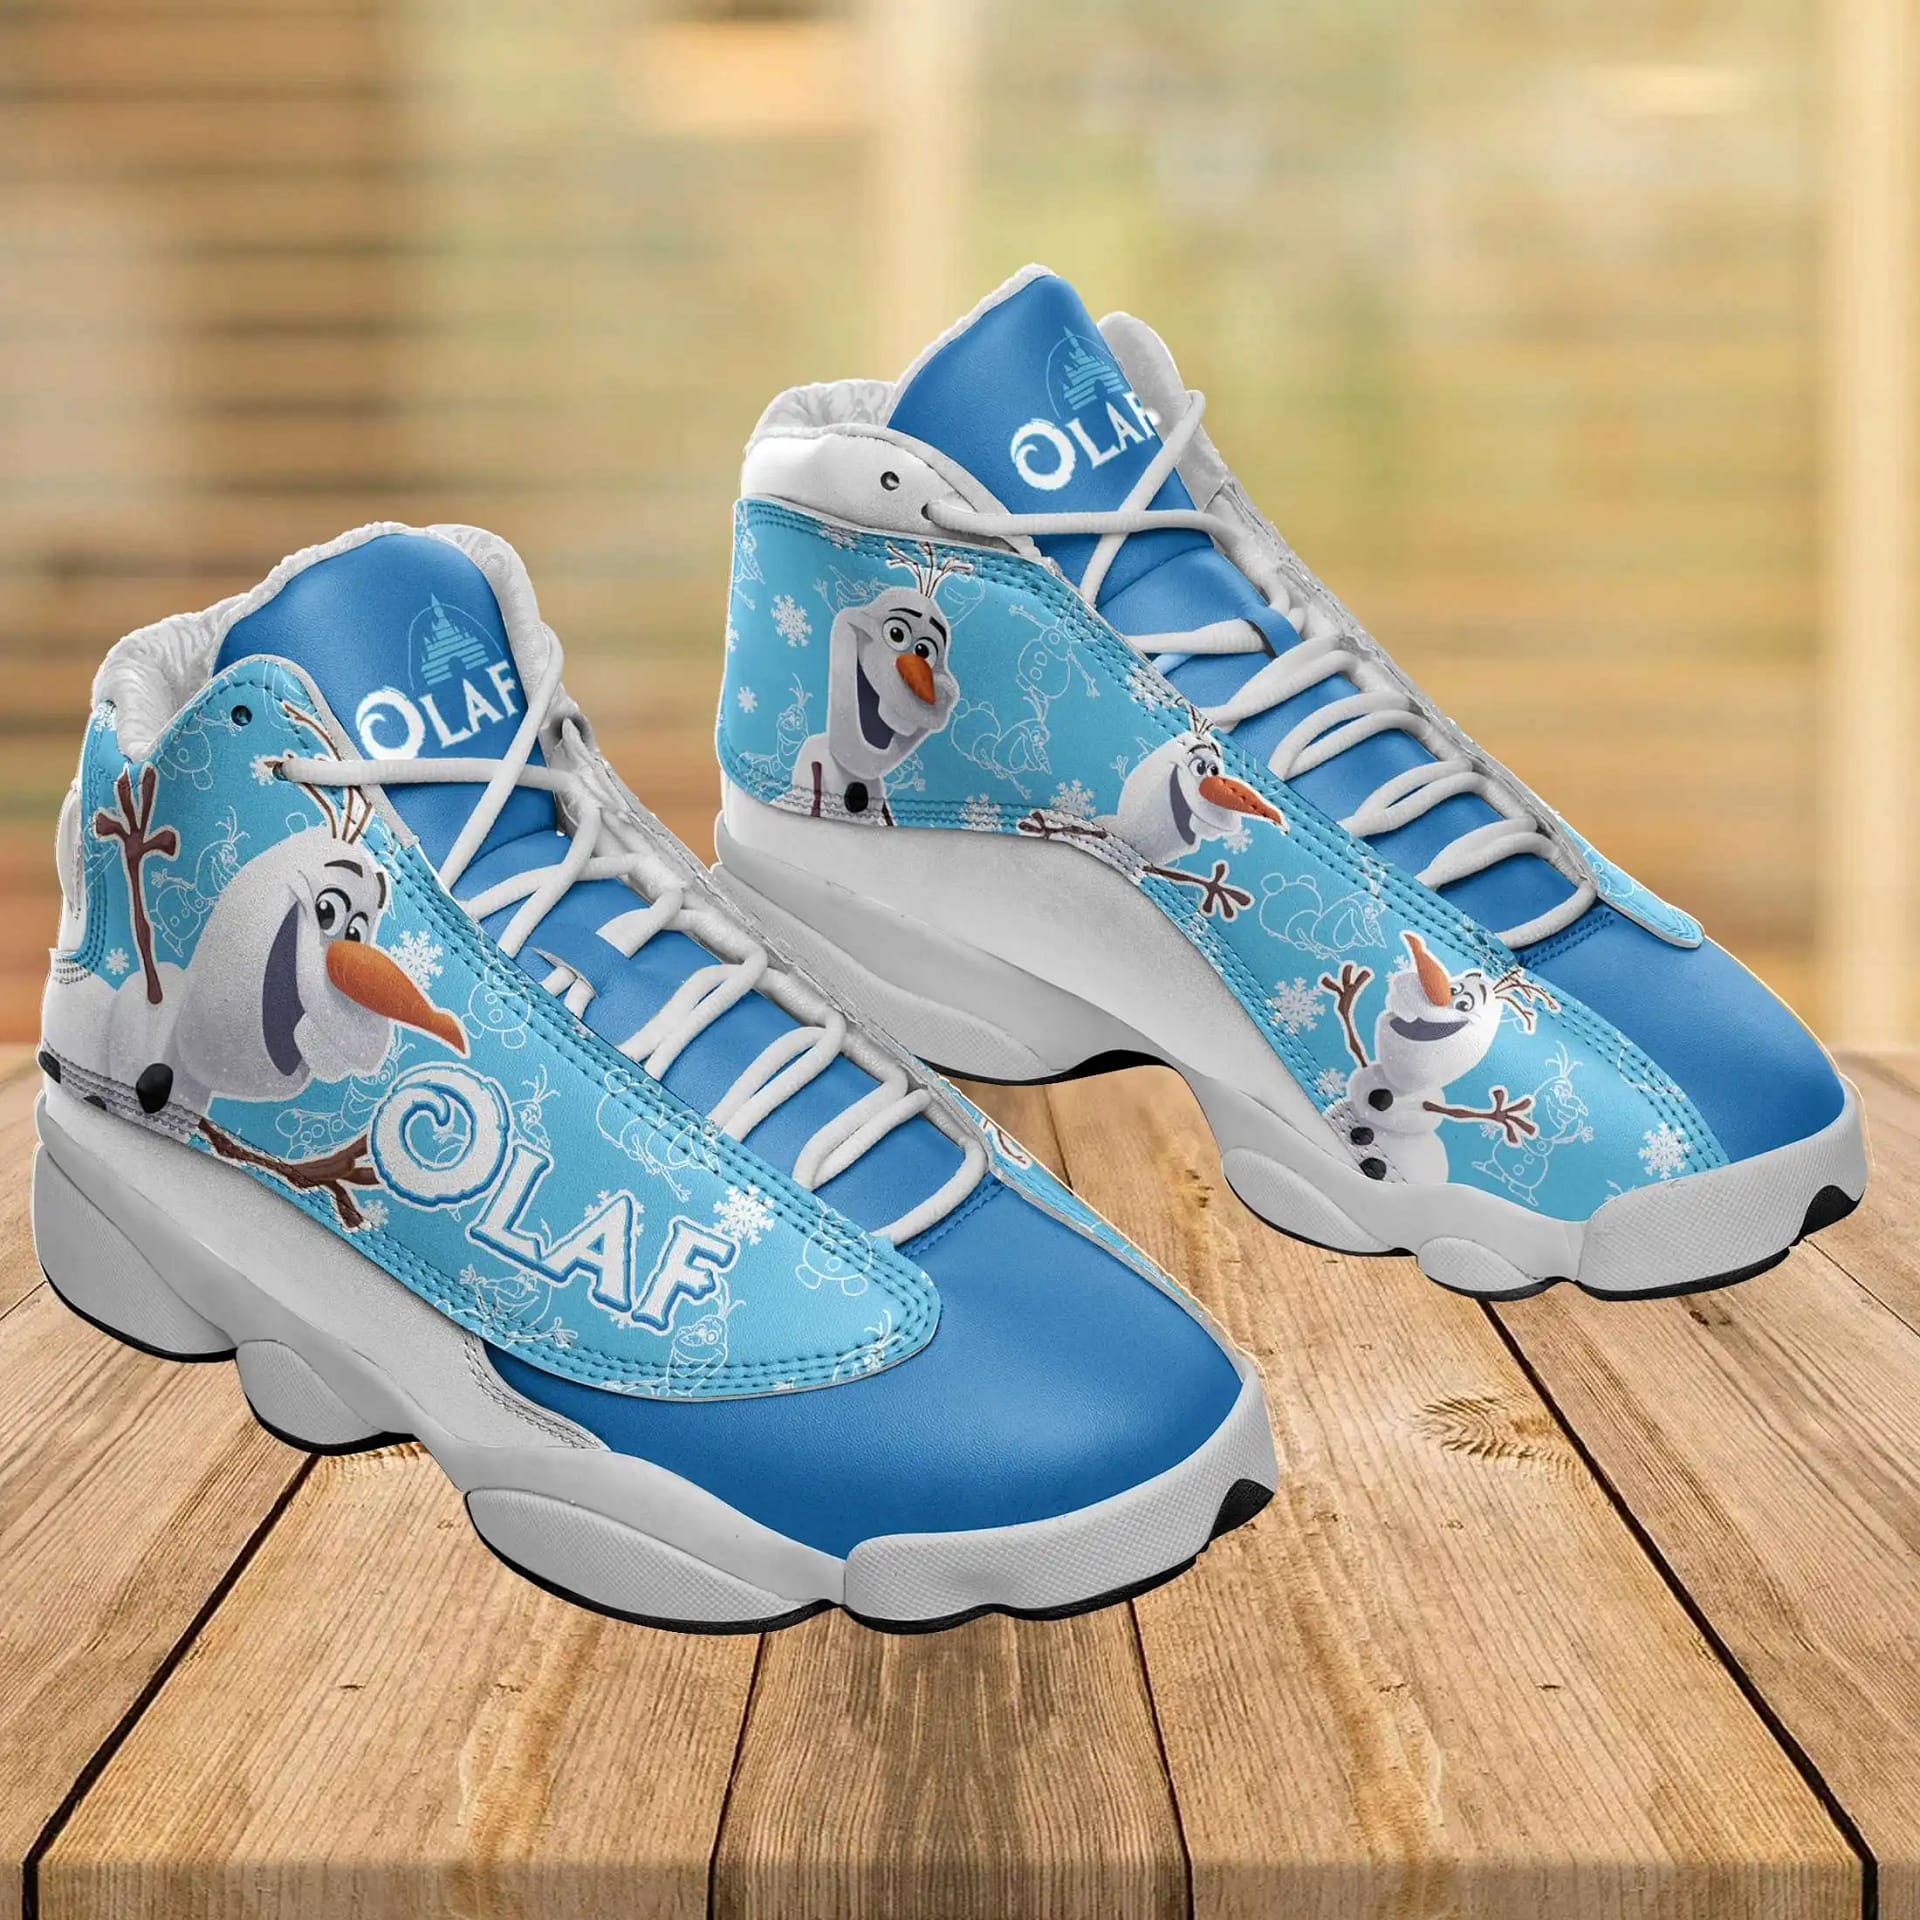 Disney Frozen Olaf Air Jordan Shoes